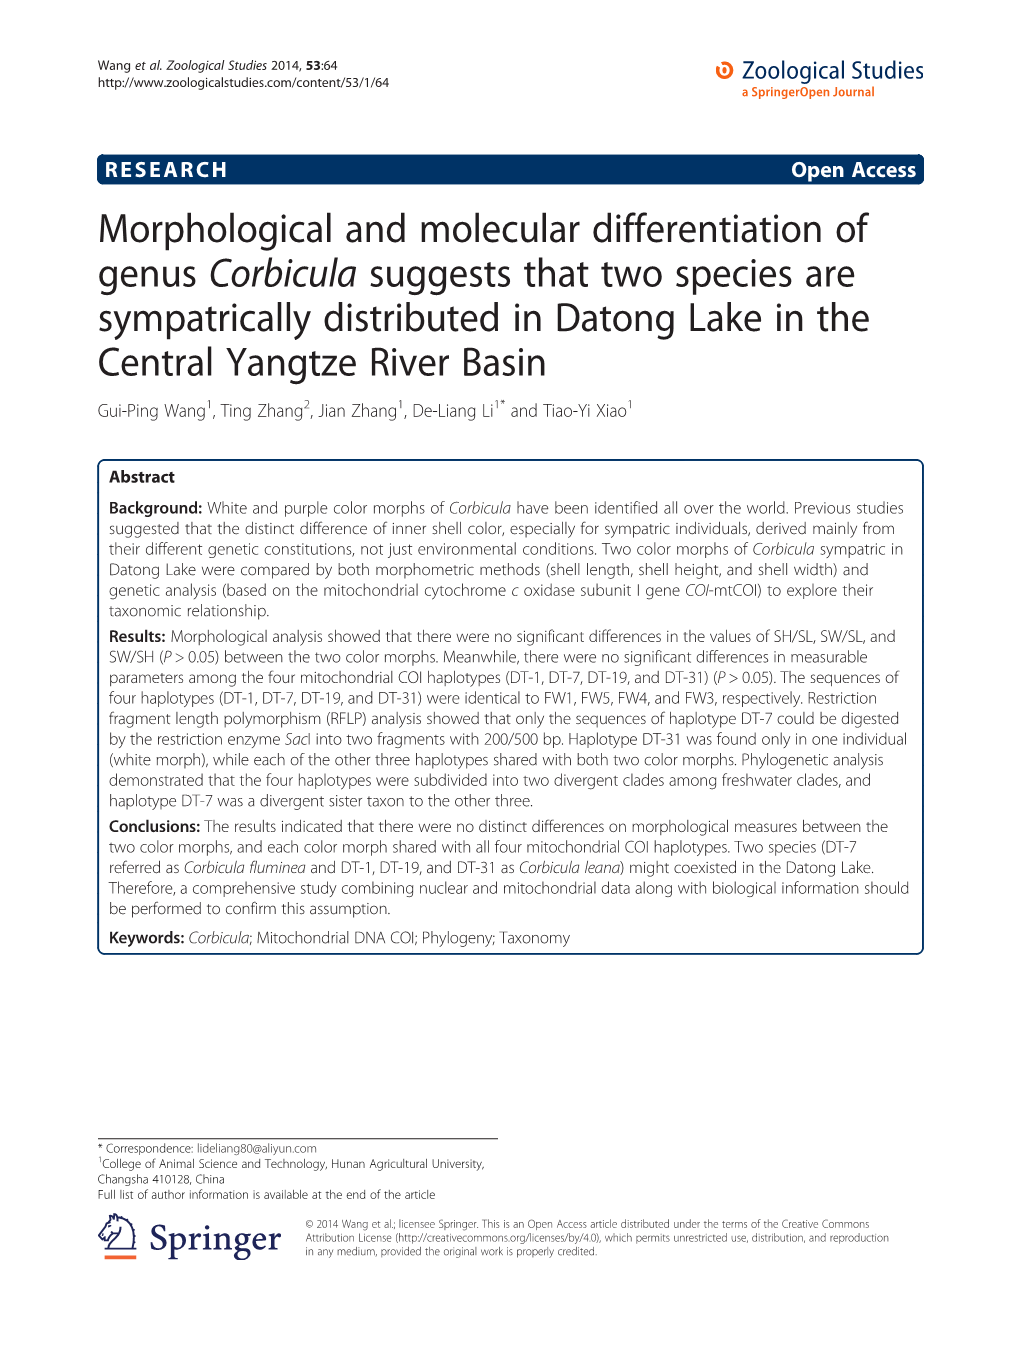 Morphological and Molecular Differentiation of Genus Corbicula